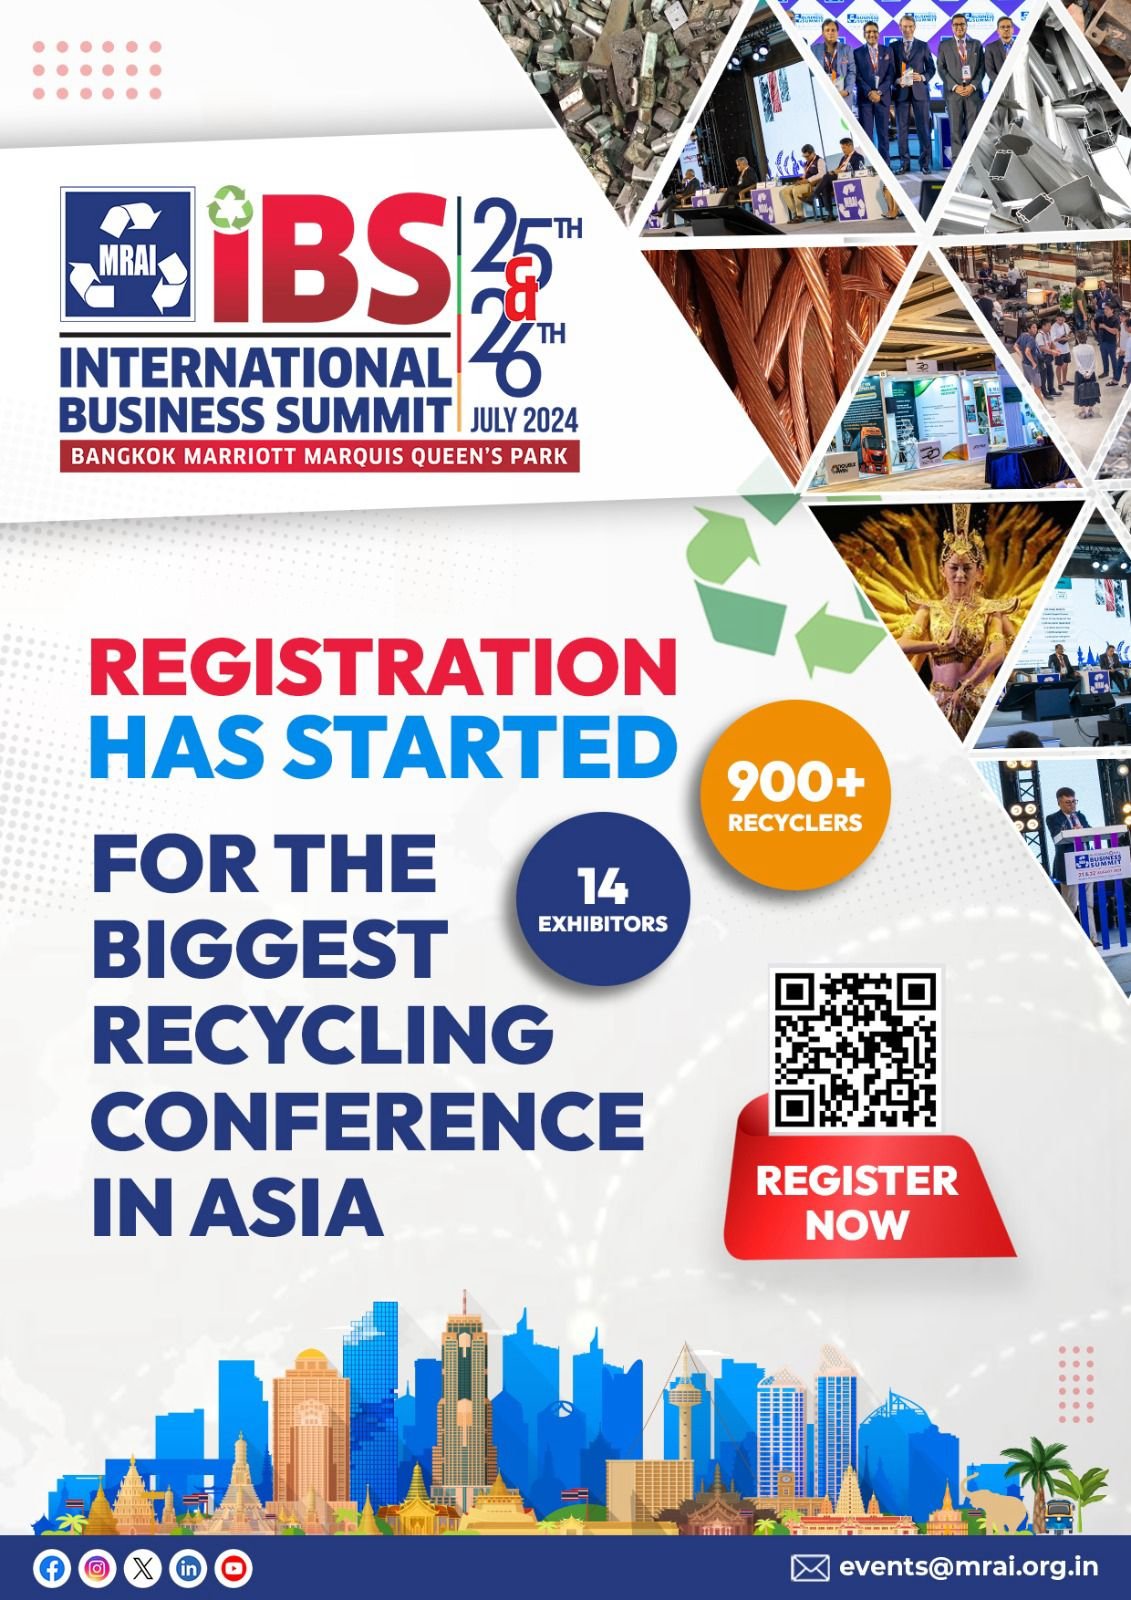 MRAI International Business Summit